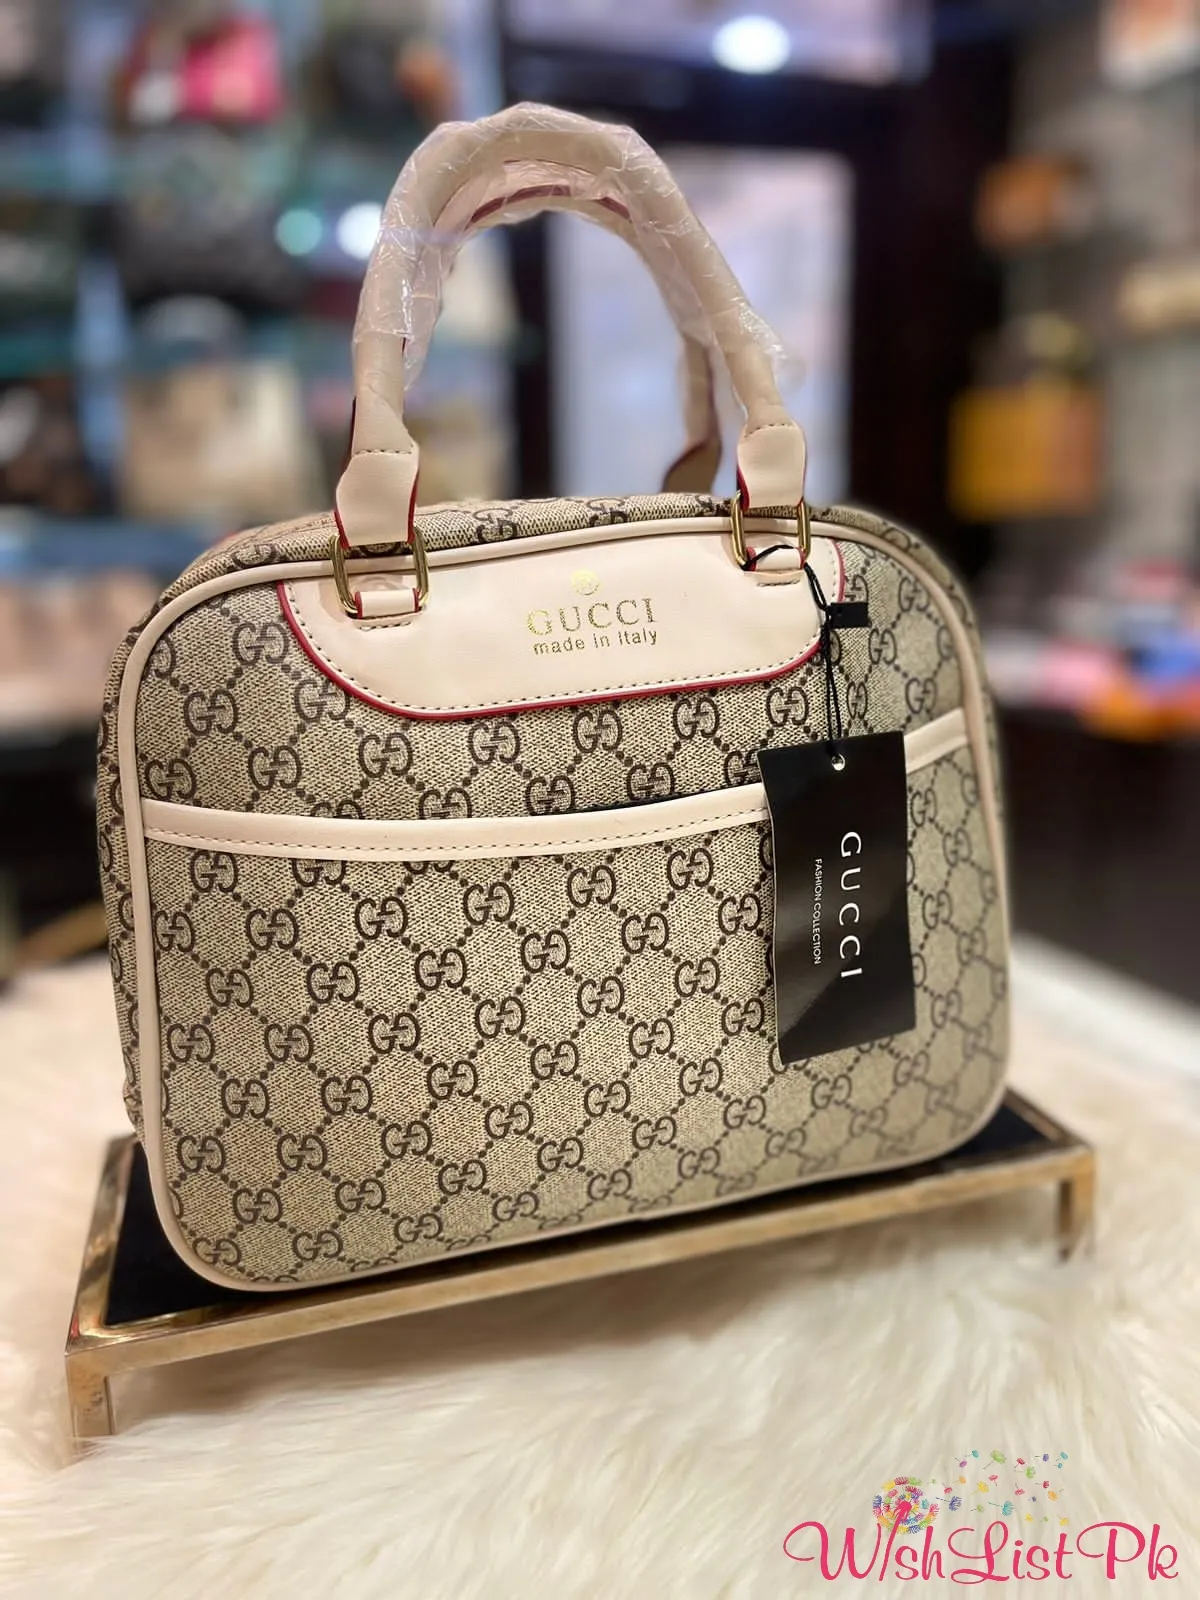 Best Price Gucci Handbag 